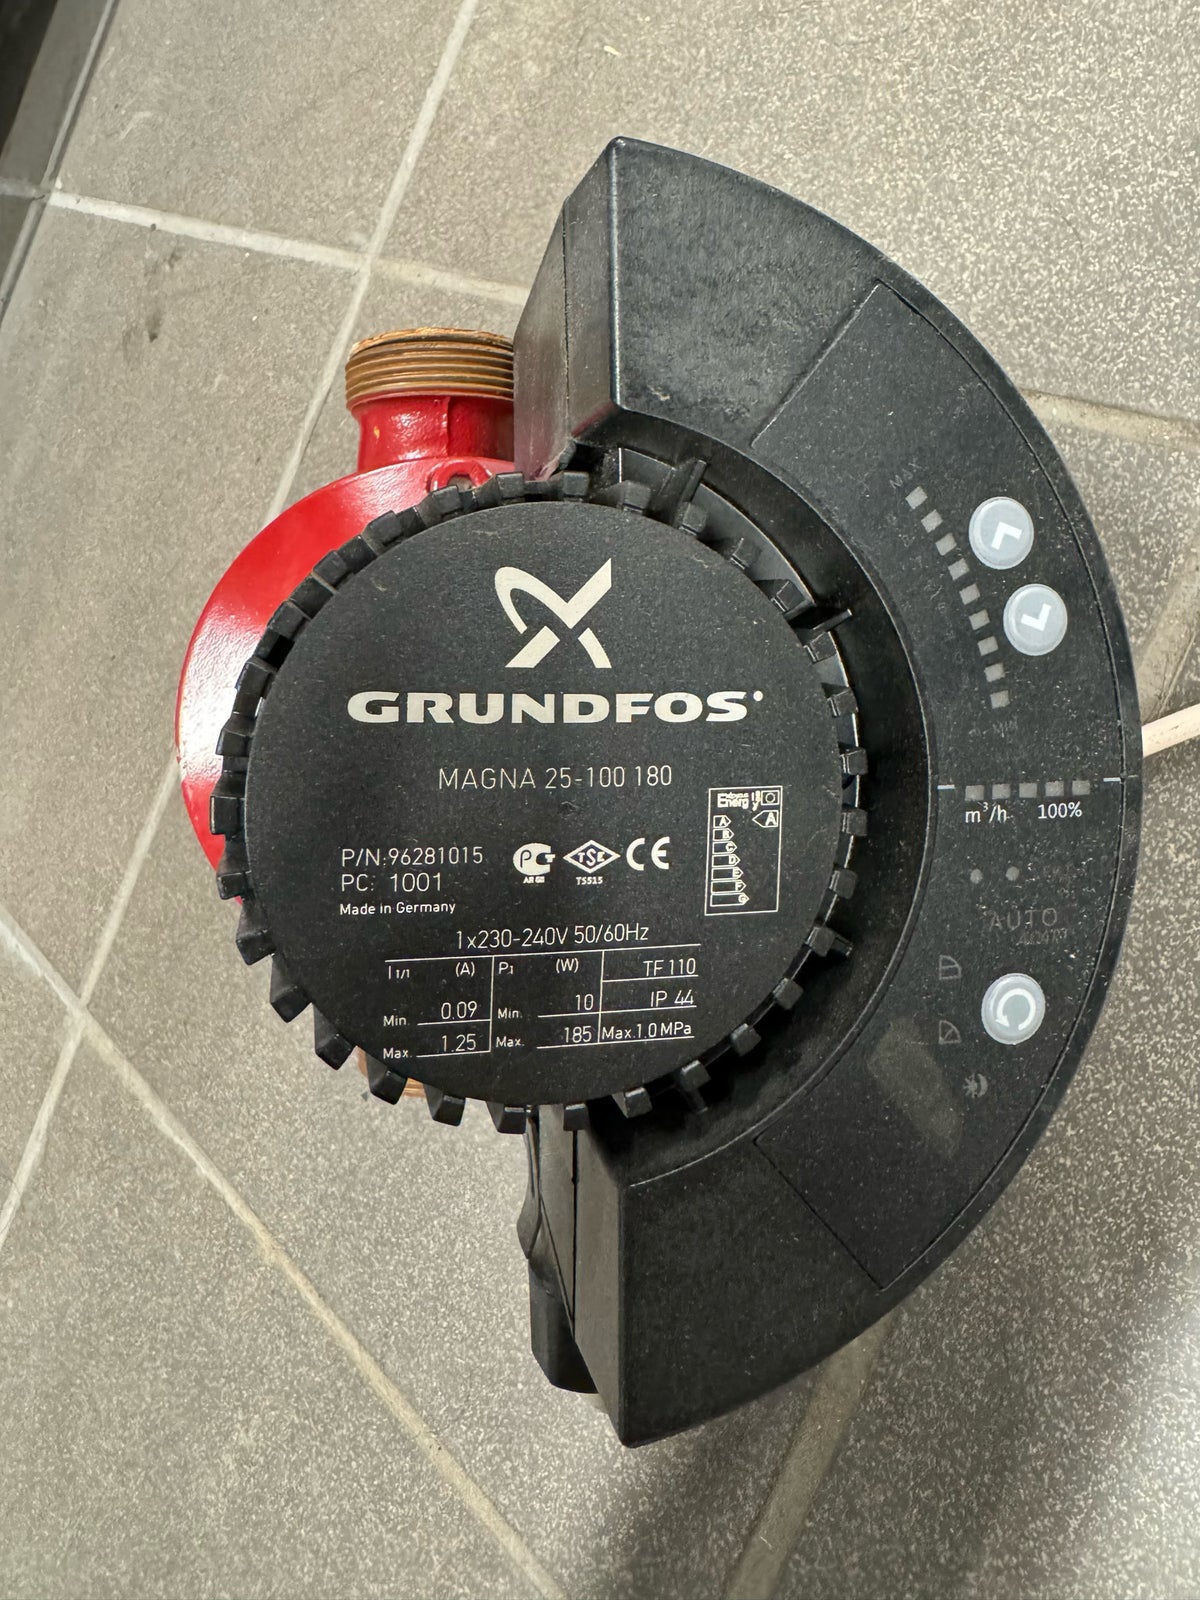 Cirkulationspumpe, Grundfos Magna 25 - 100 180